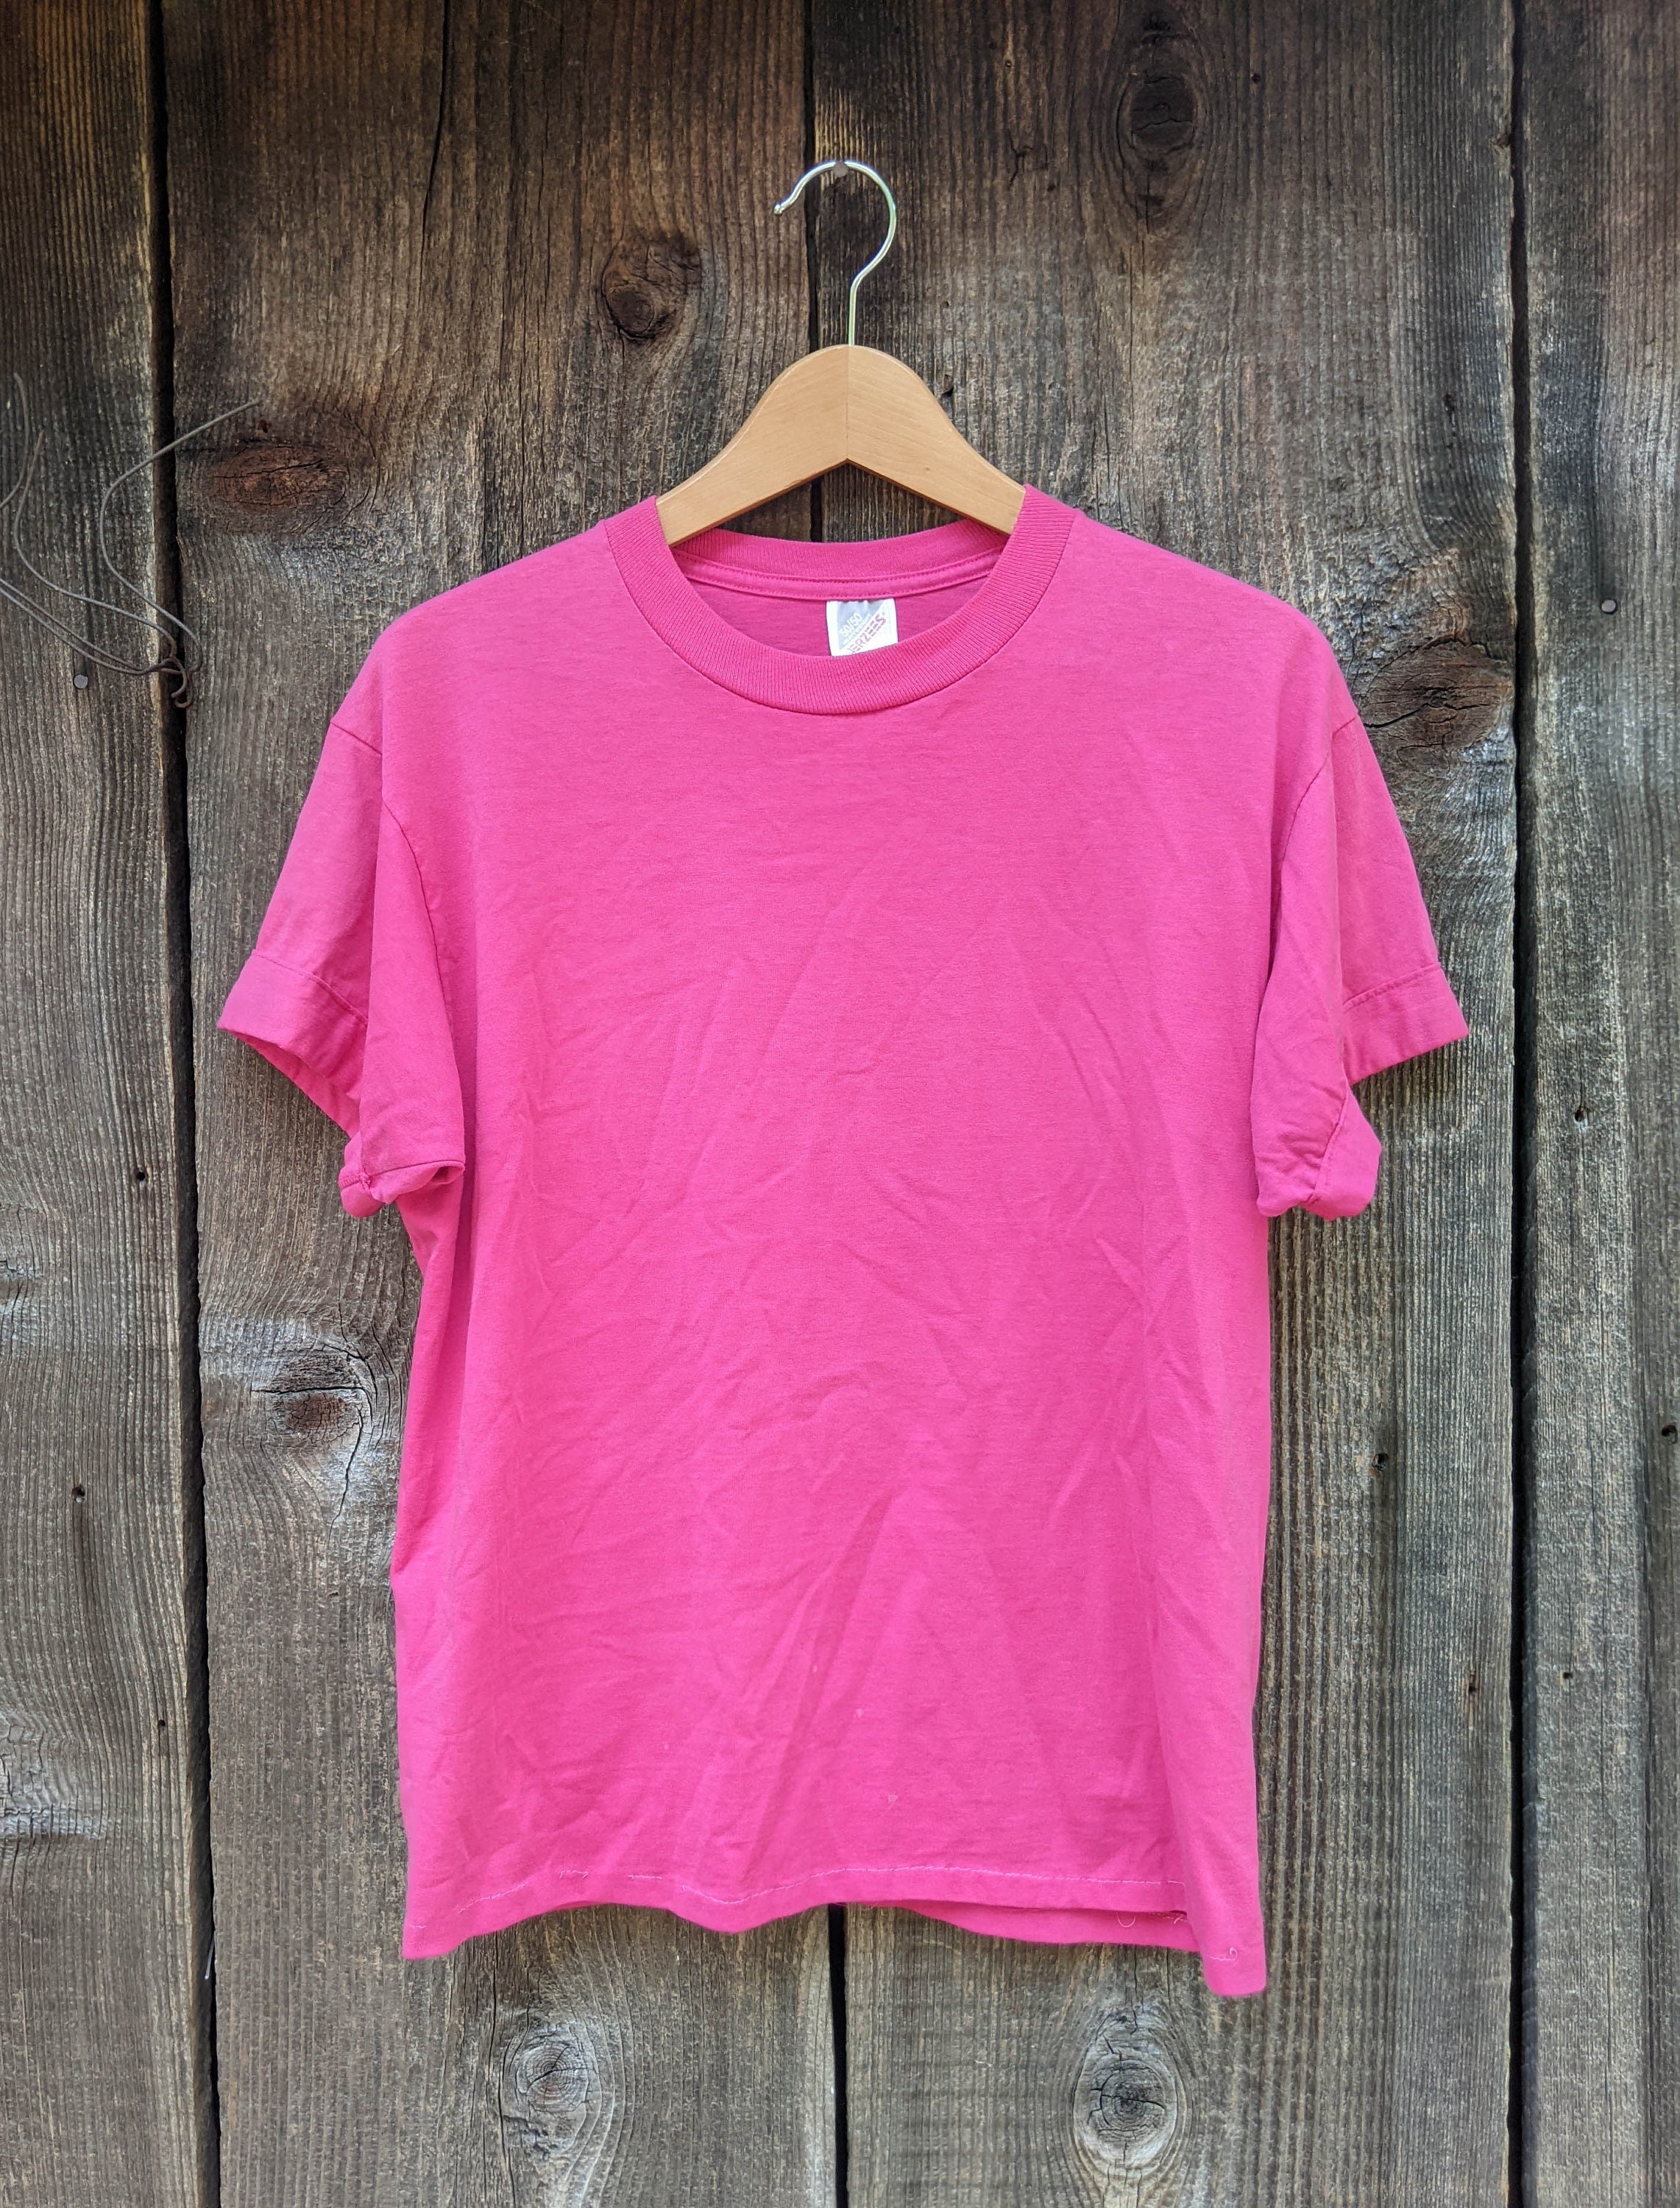 DesertGlassVintage 80s Vintage Pink T Shirt / Single Stitch Seam Preppy Diva Glam Cuffed Sleeves Boxy Baggy / Gym Jogging Athletic Hipster / Jerzees 50/50 M L